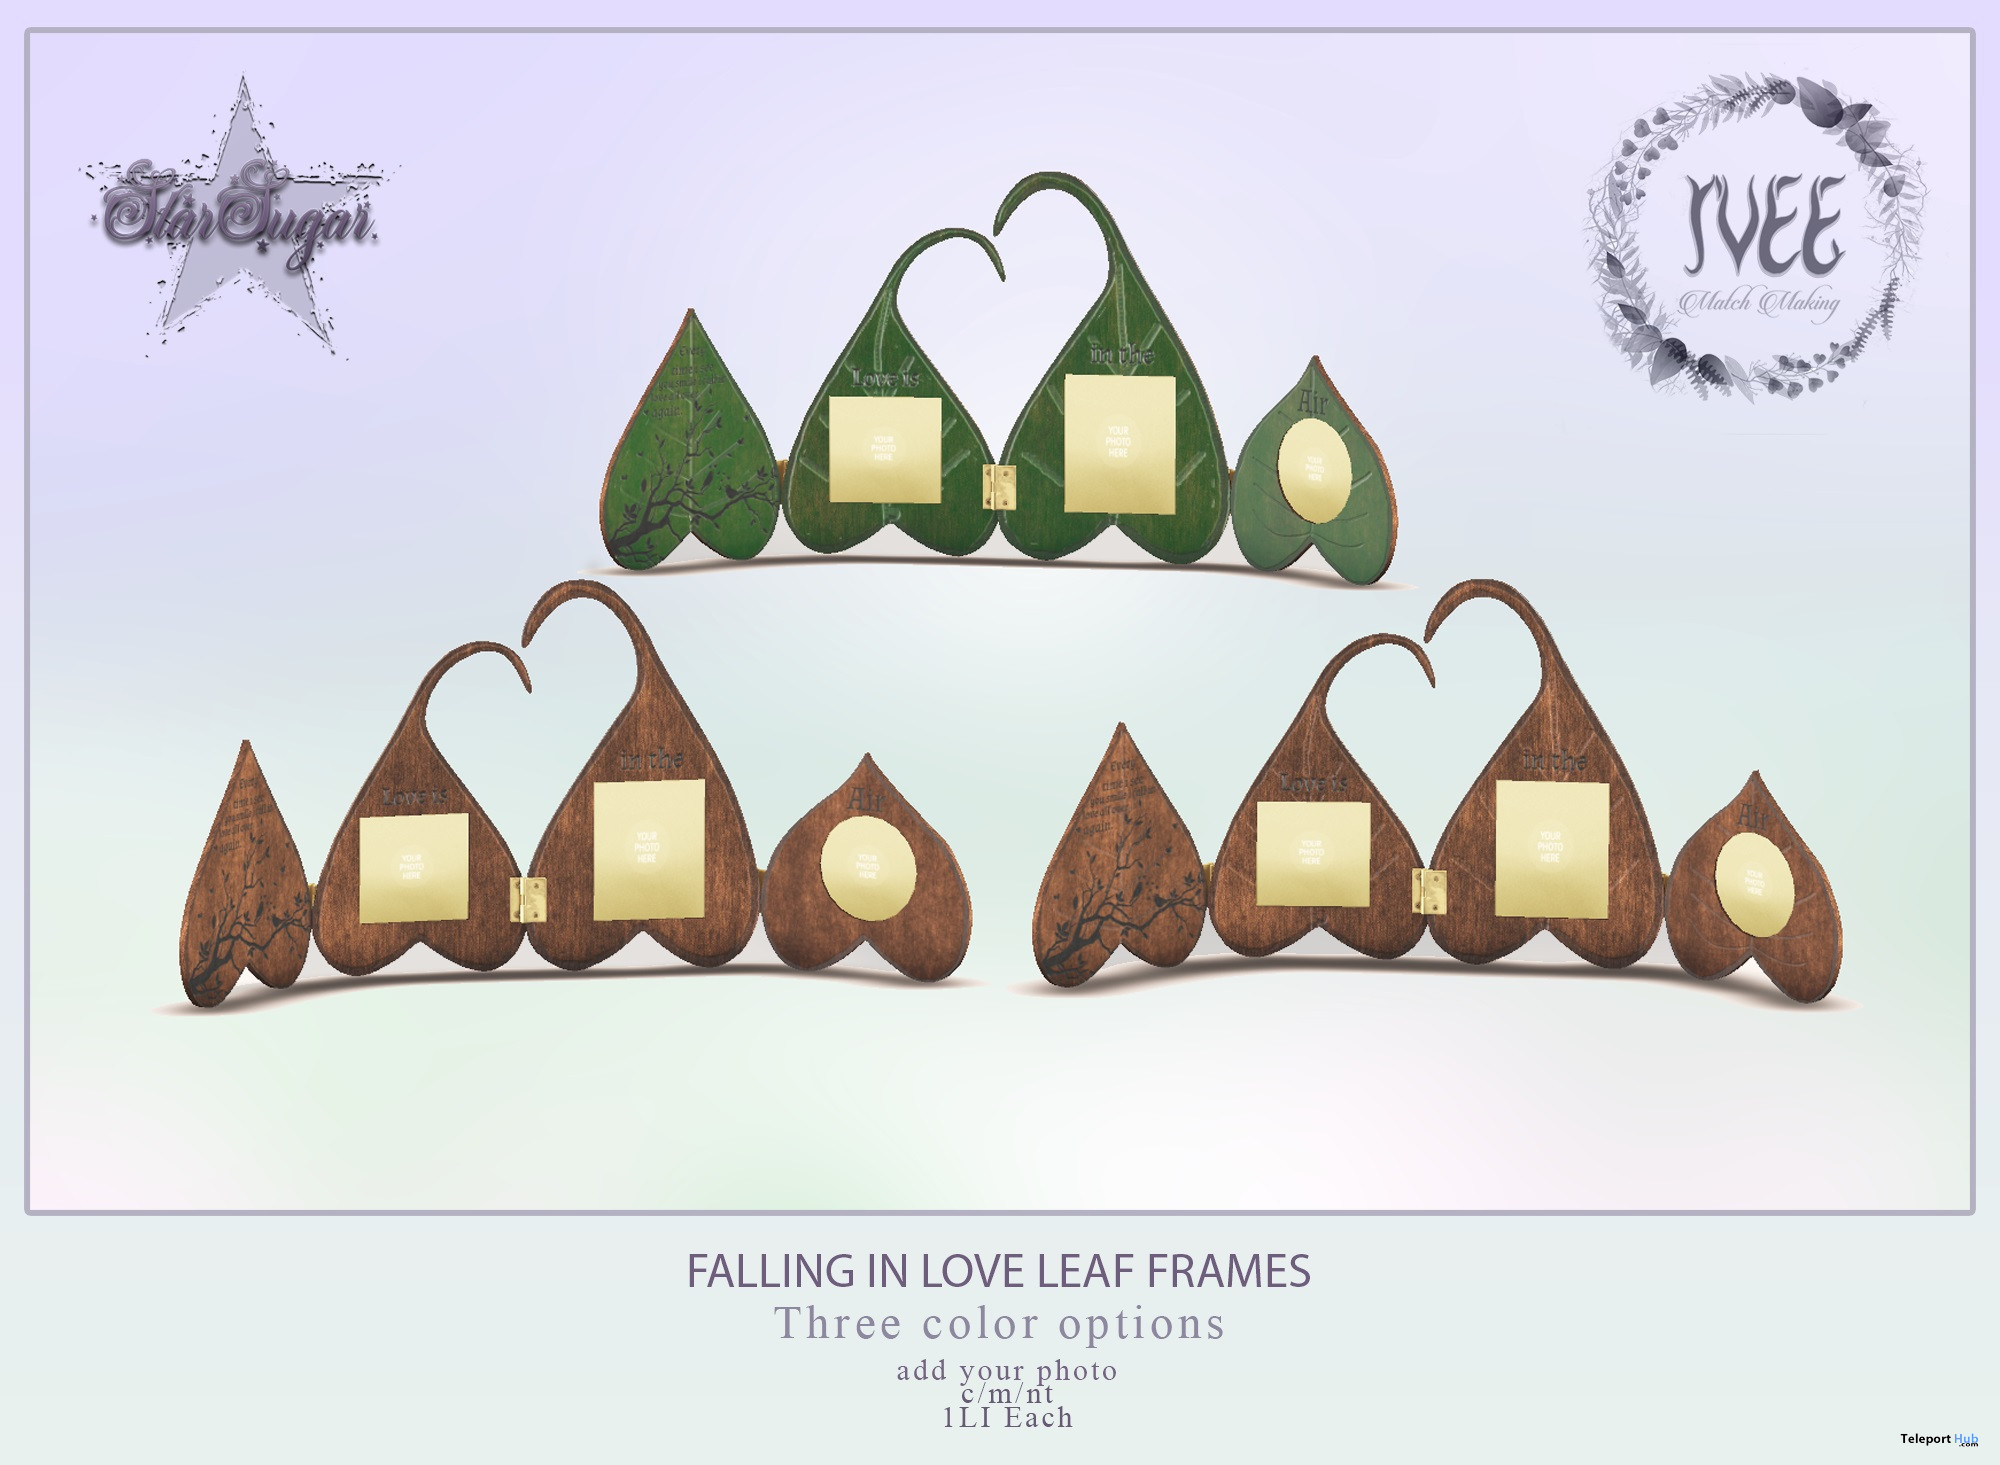 Falling In Love Leaf Frames July 2022 Gift by Star Sugar x IVEE - Teleport Hub - teleporthub.com